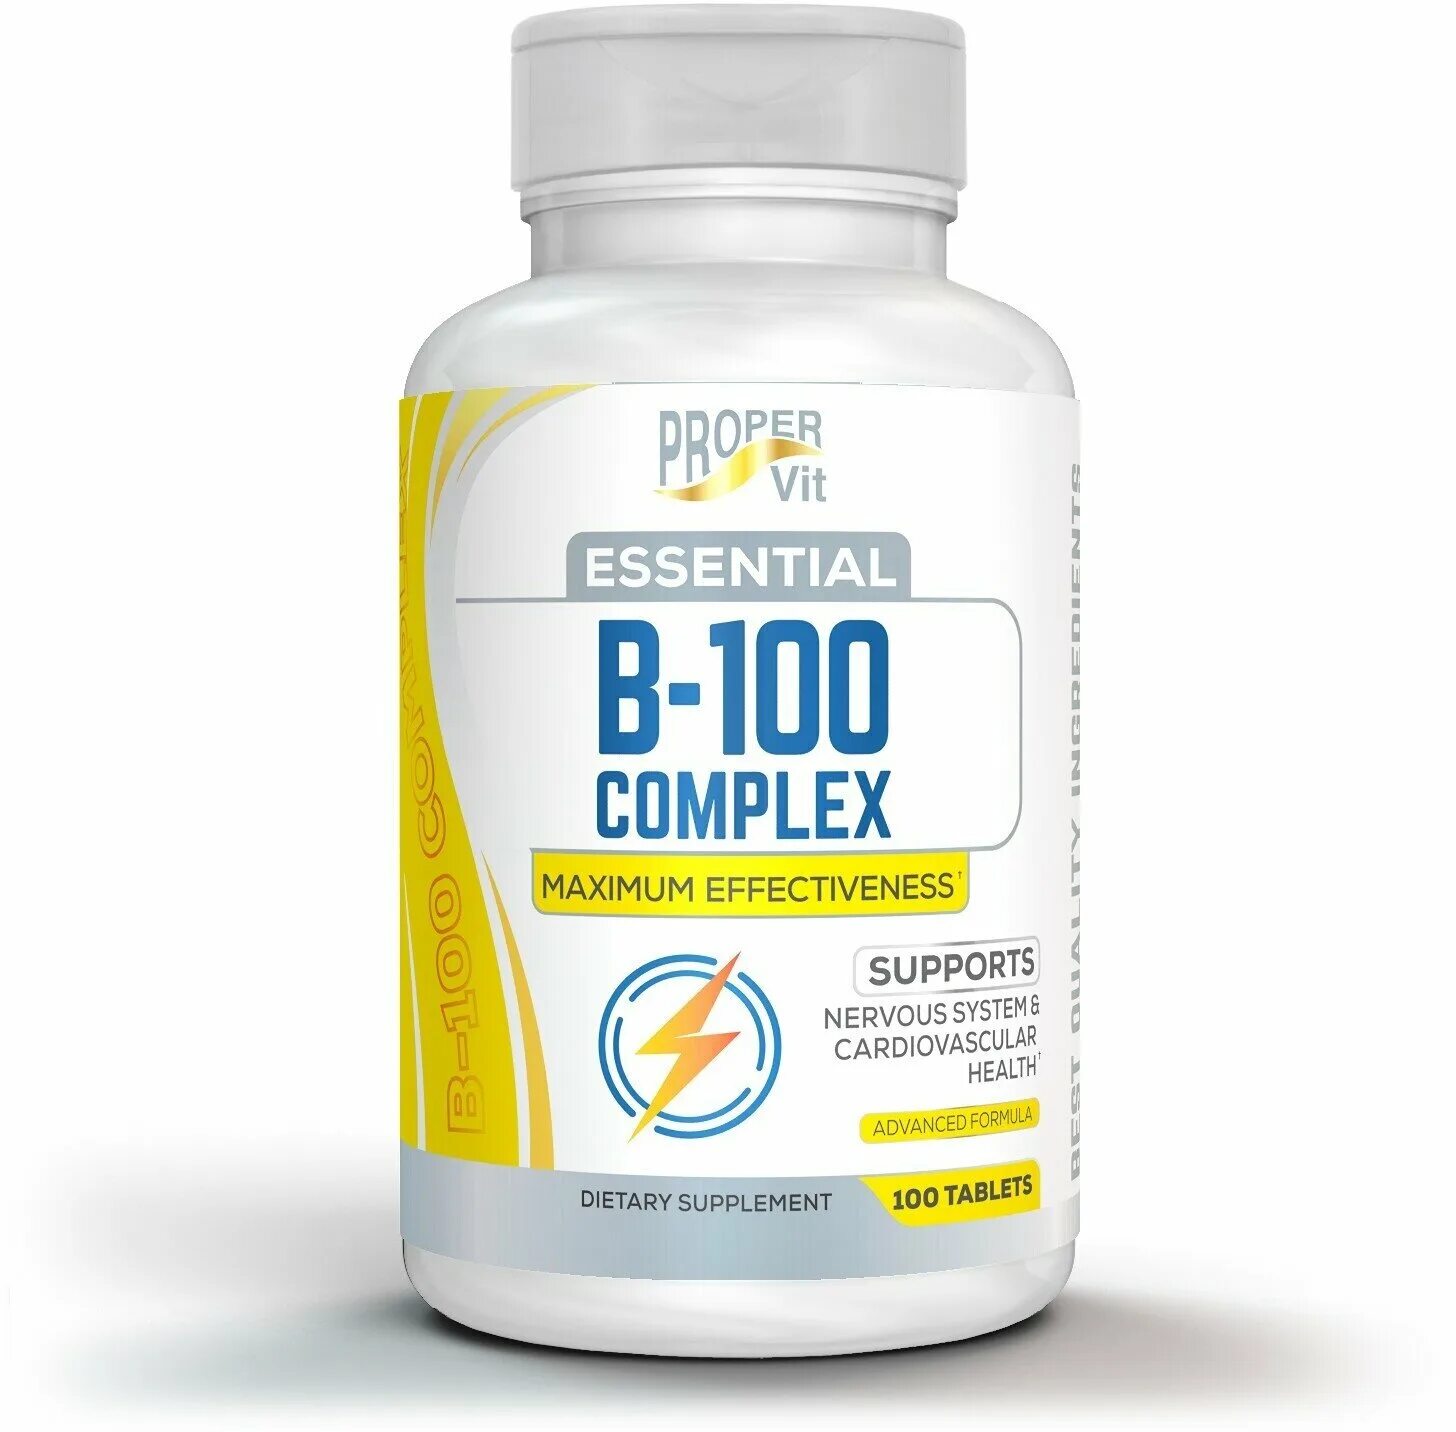 Вит группы б. Proper Vit Essential b -100 Complex maximum effectiveness 100 таб. Proper Vit Buffered Vitamin c Complex 100 Tablets. Комплекс витаминов группы b. B Complex витамины.